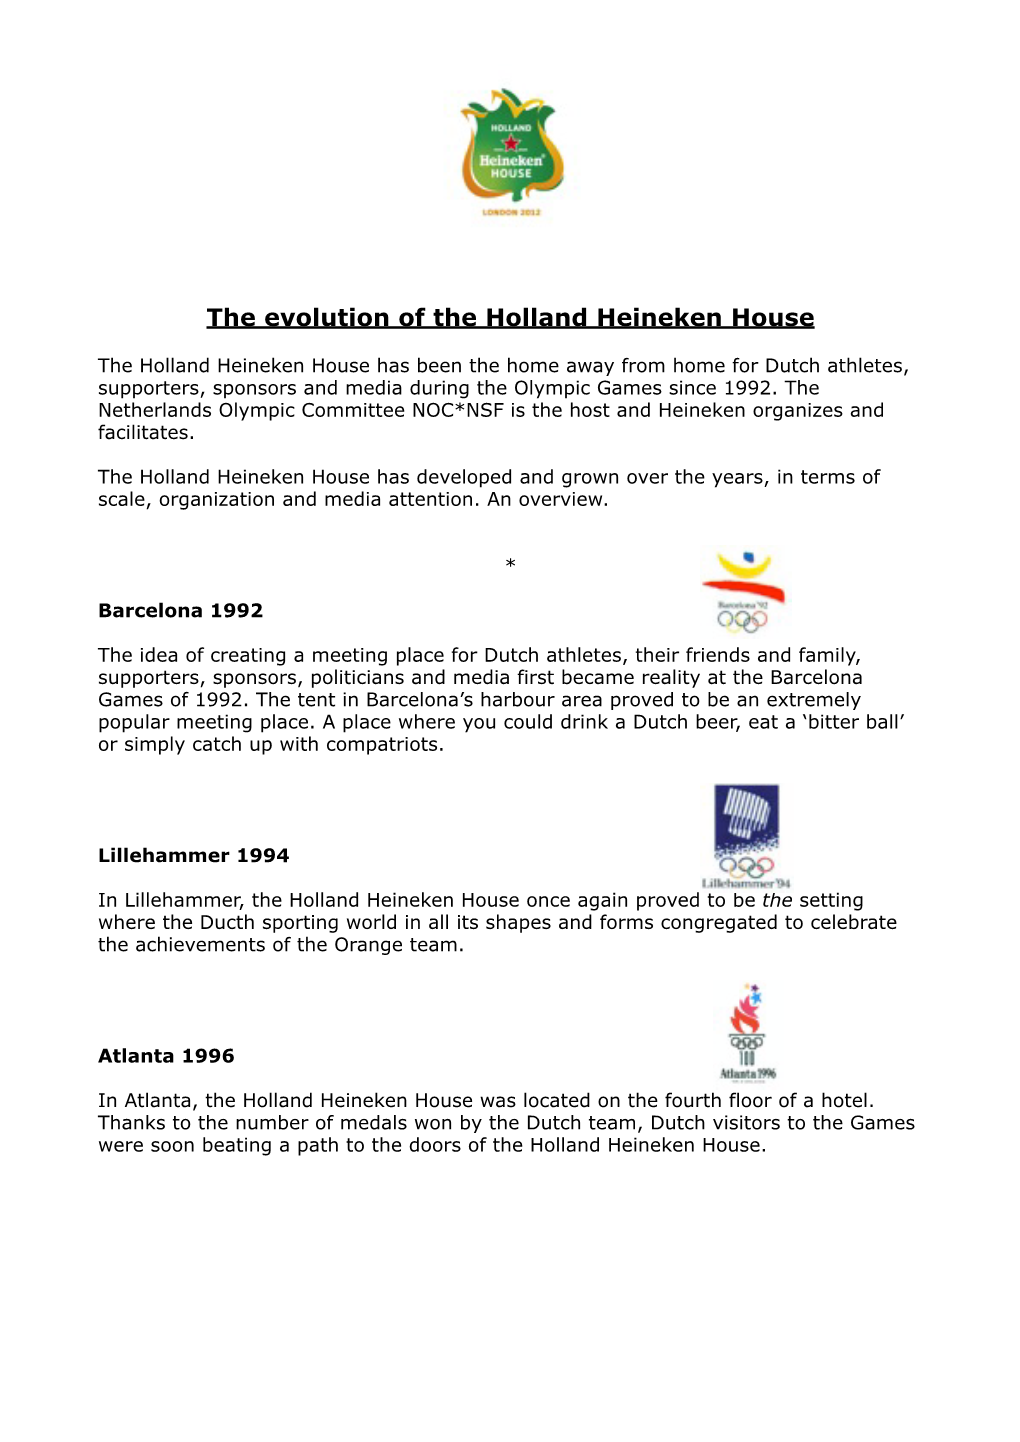 Evolution of the Holland Heineken House